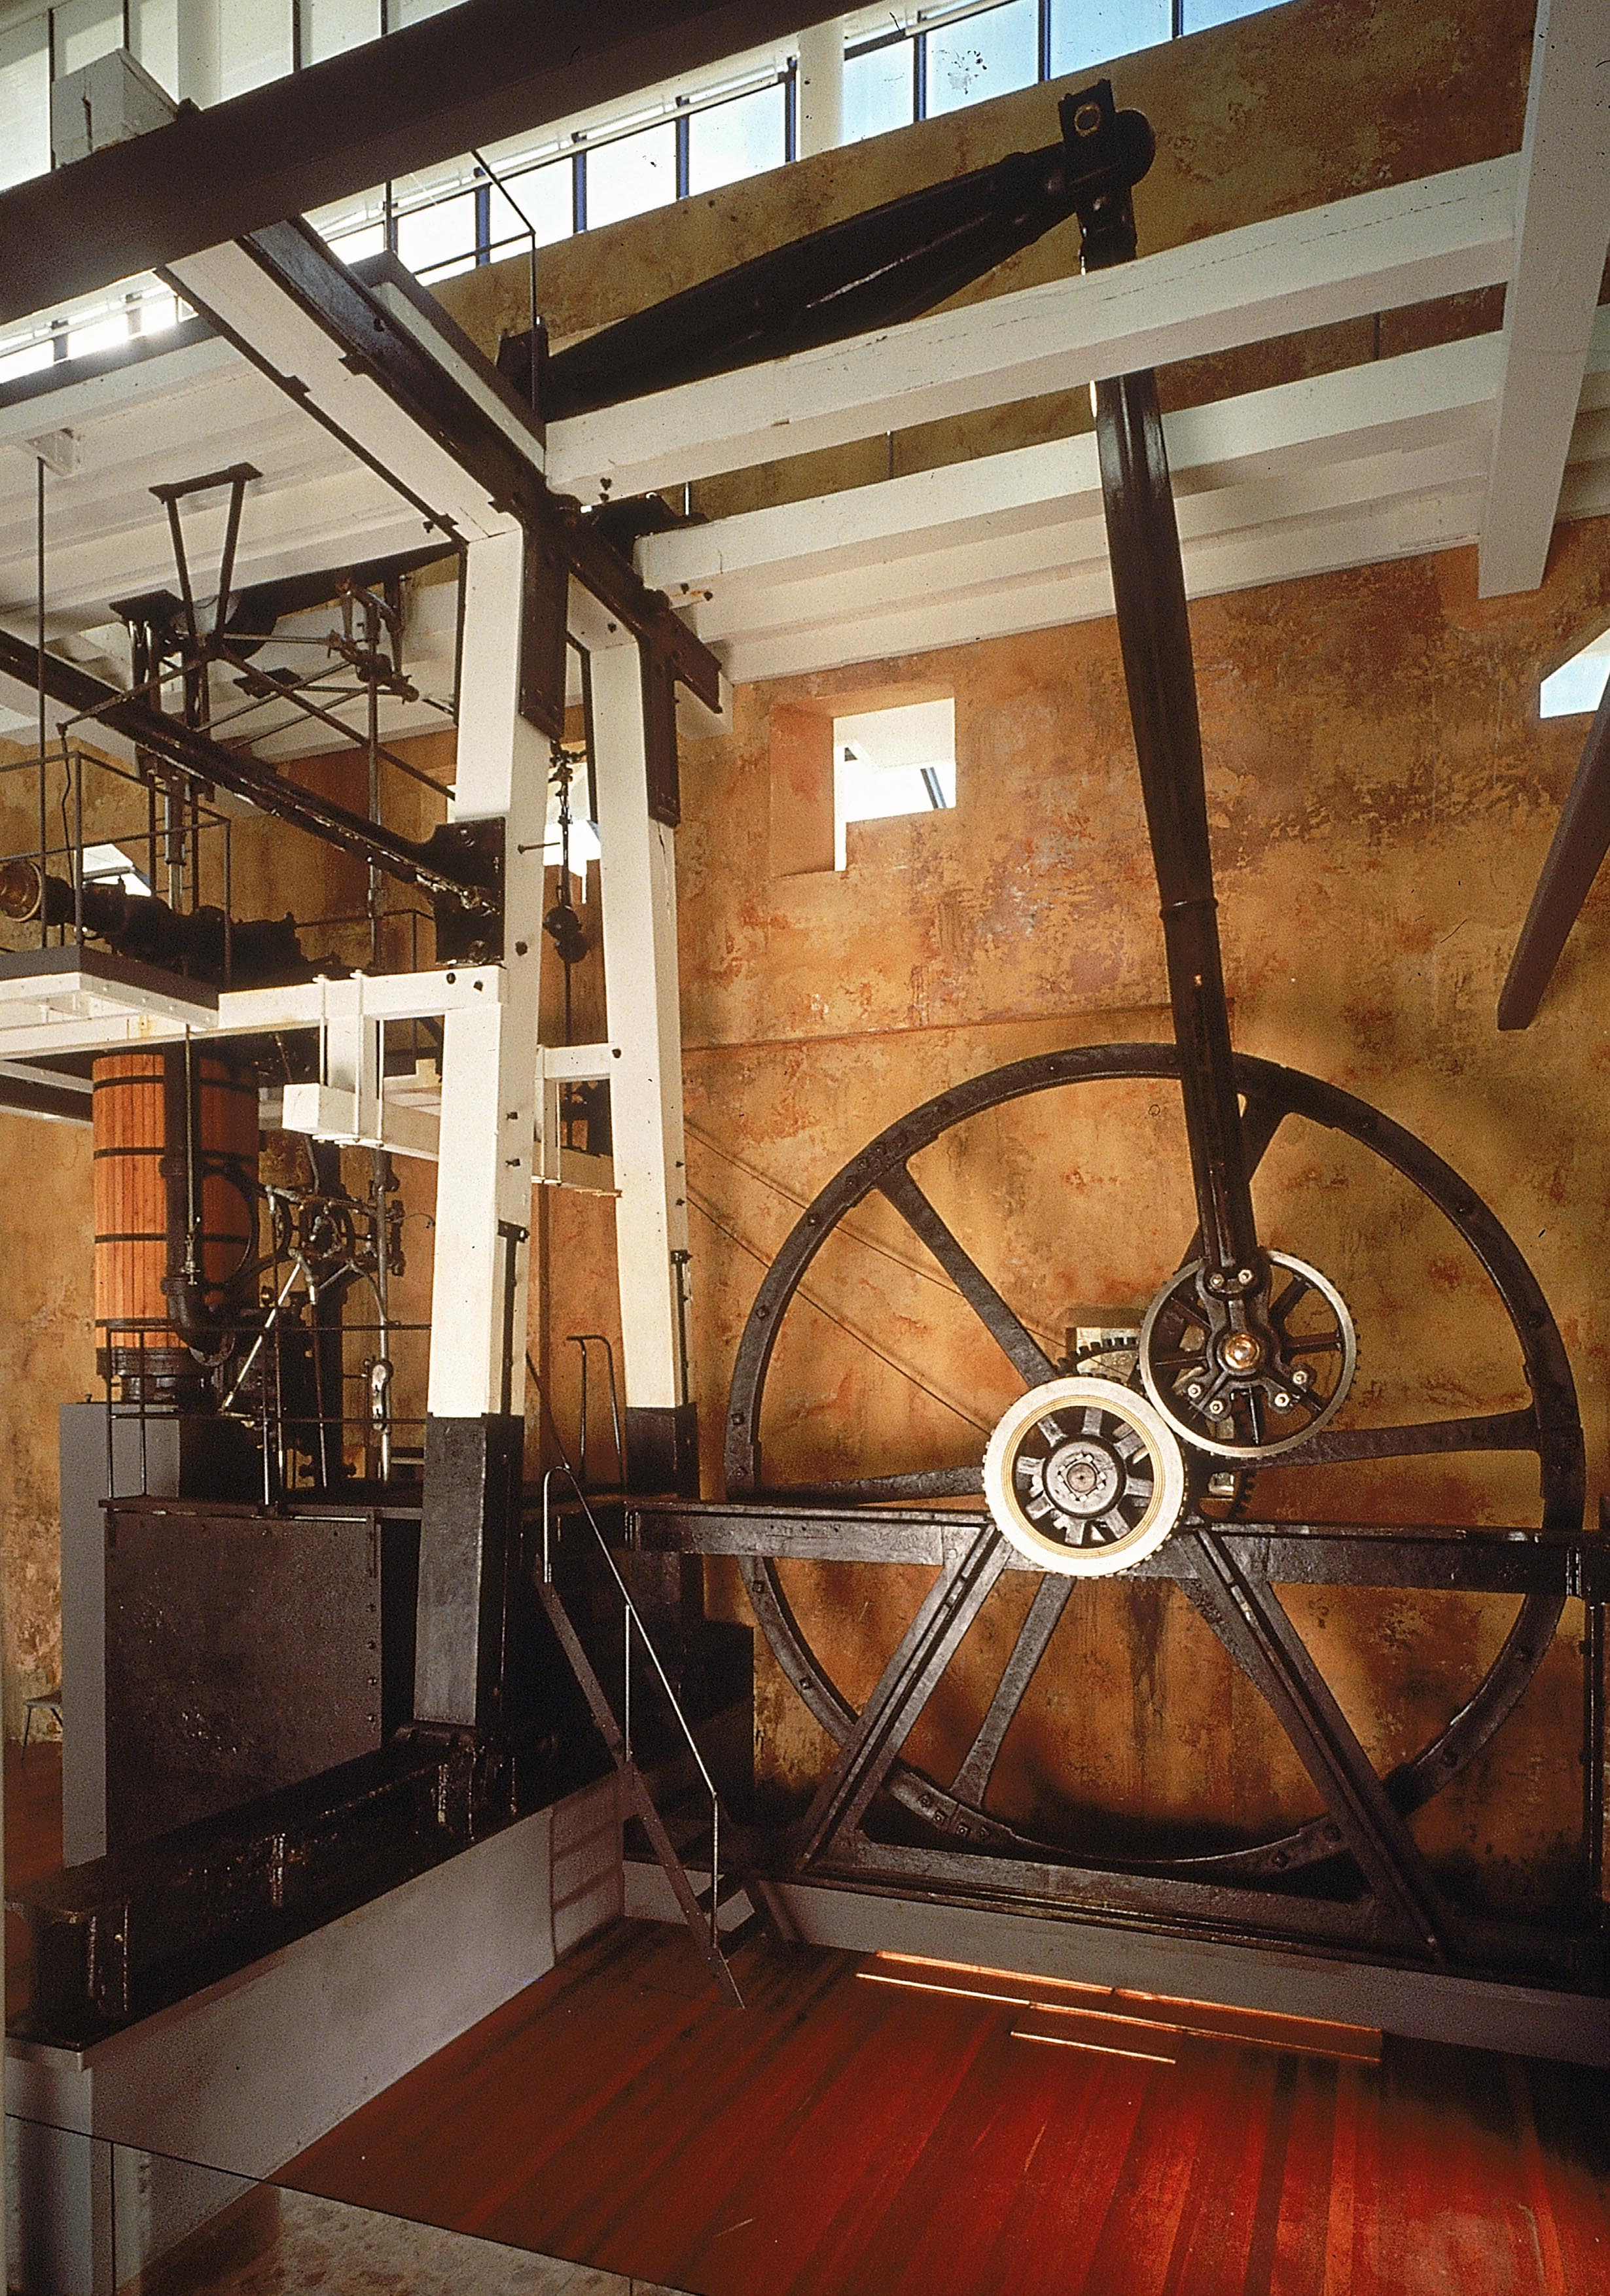 Boulton and Watt rotative steam engine, 1785